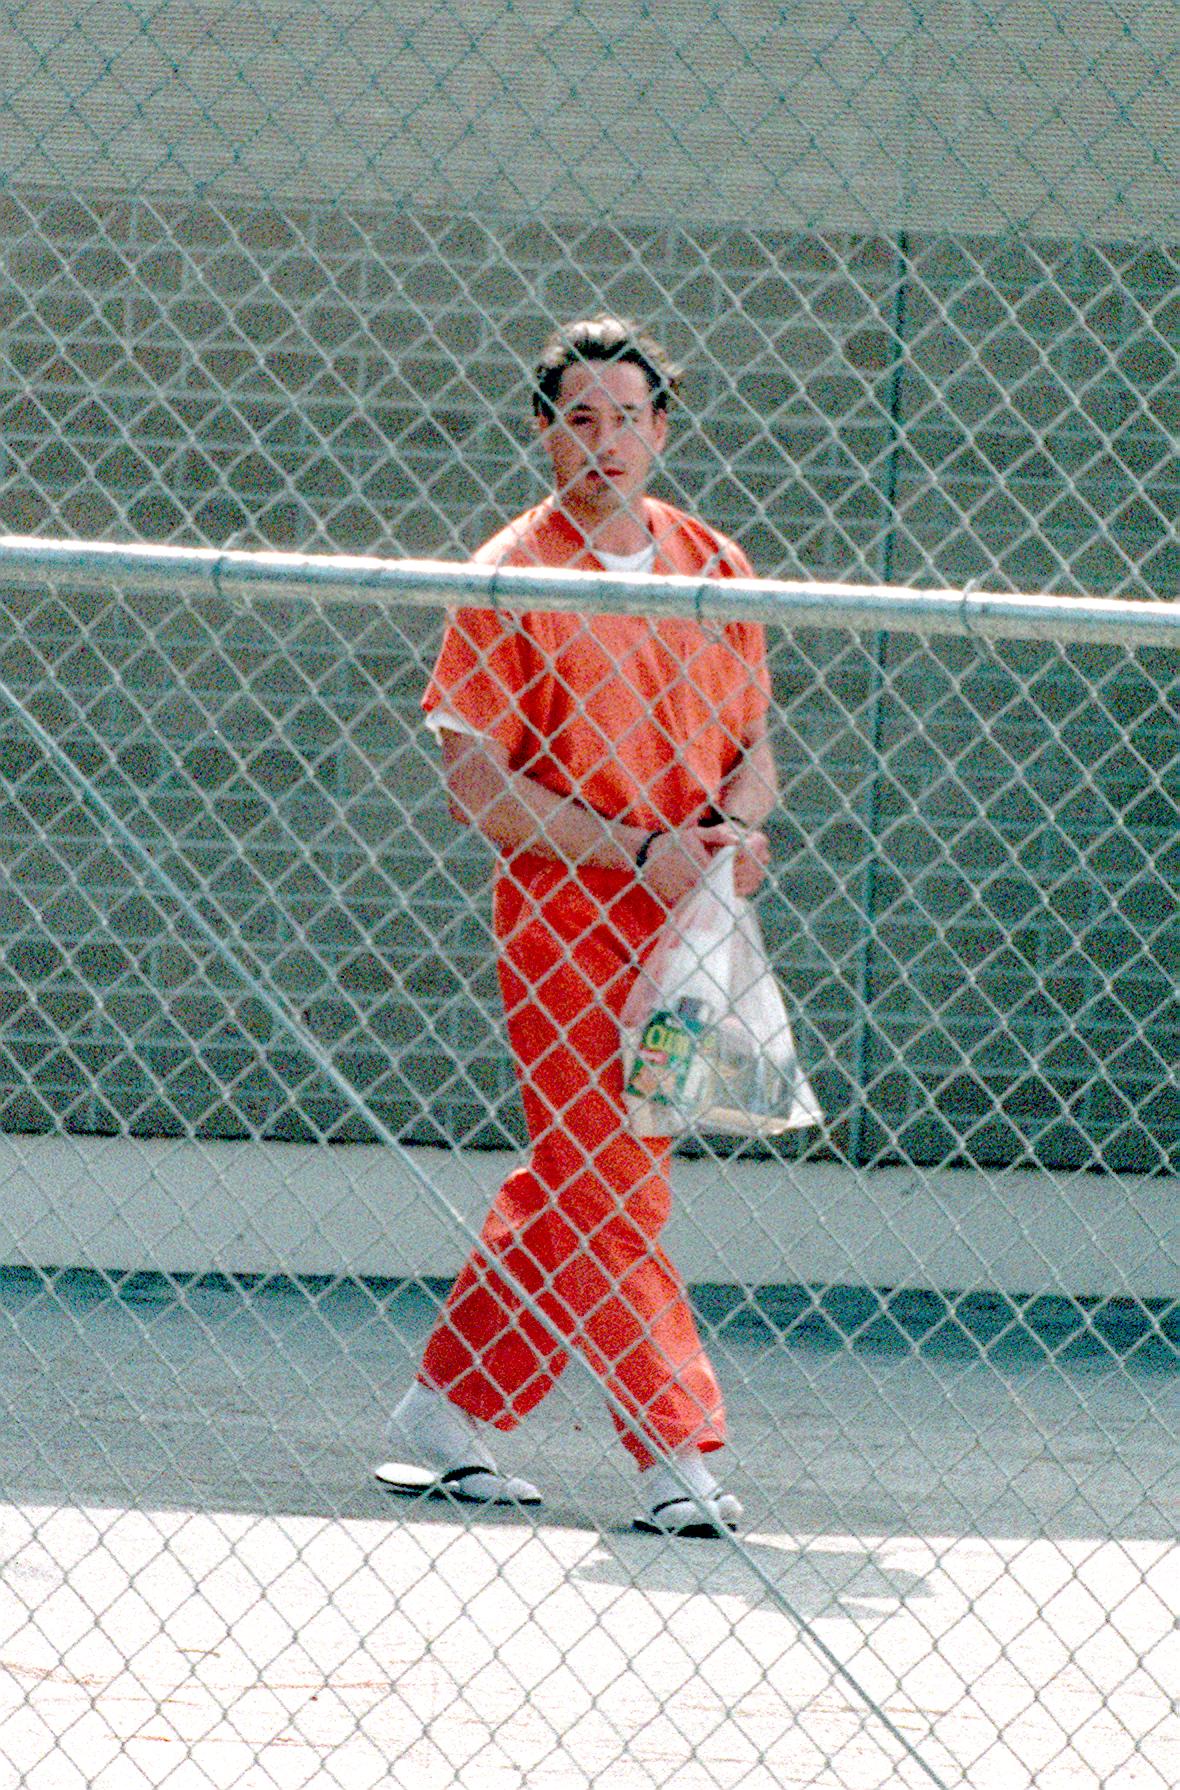 Robert Downey Jr. am 5. August 1999 in Malibu, Kalifornien. | Quelle: Getty Images